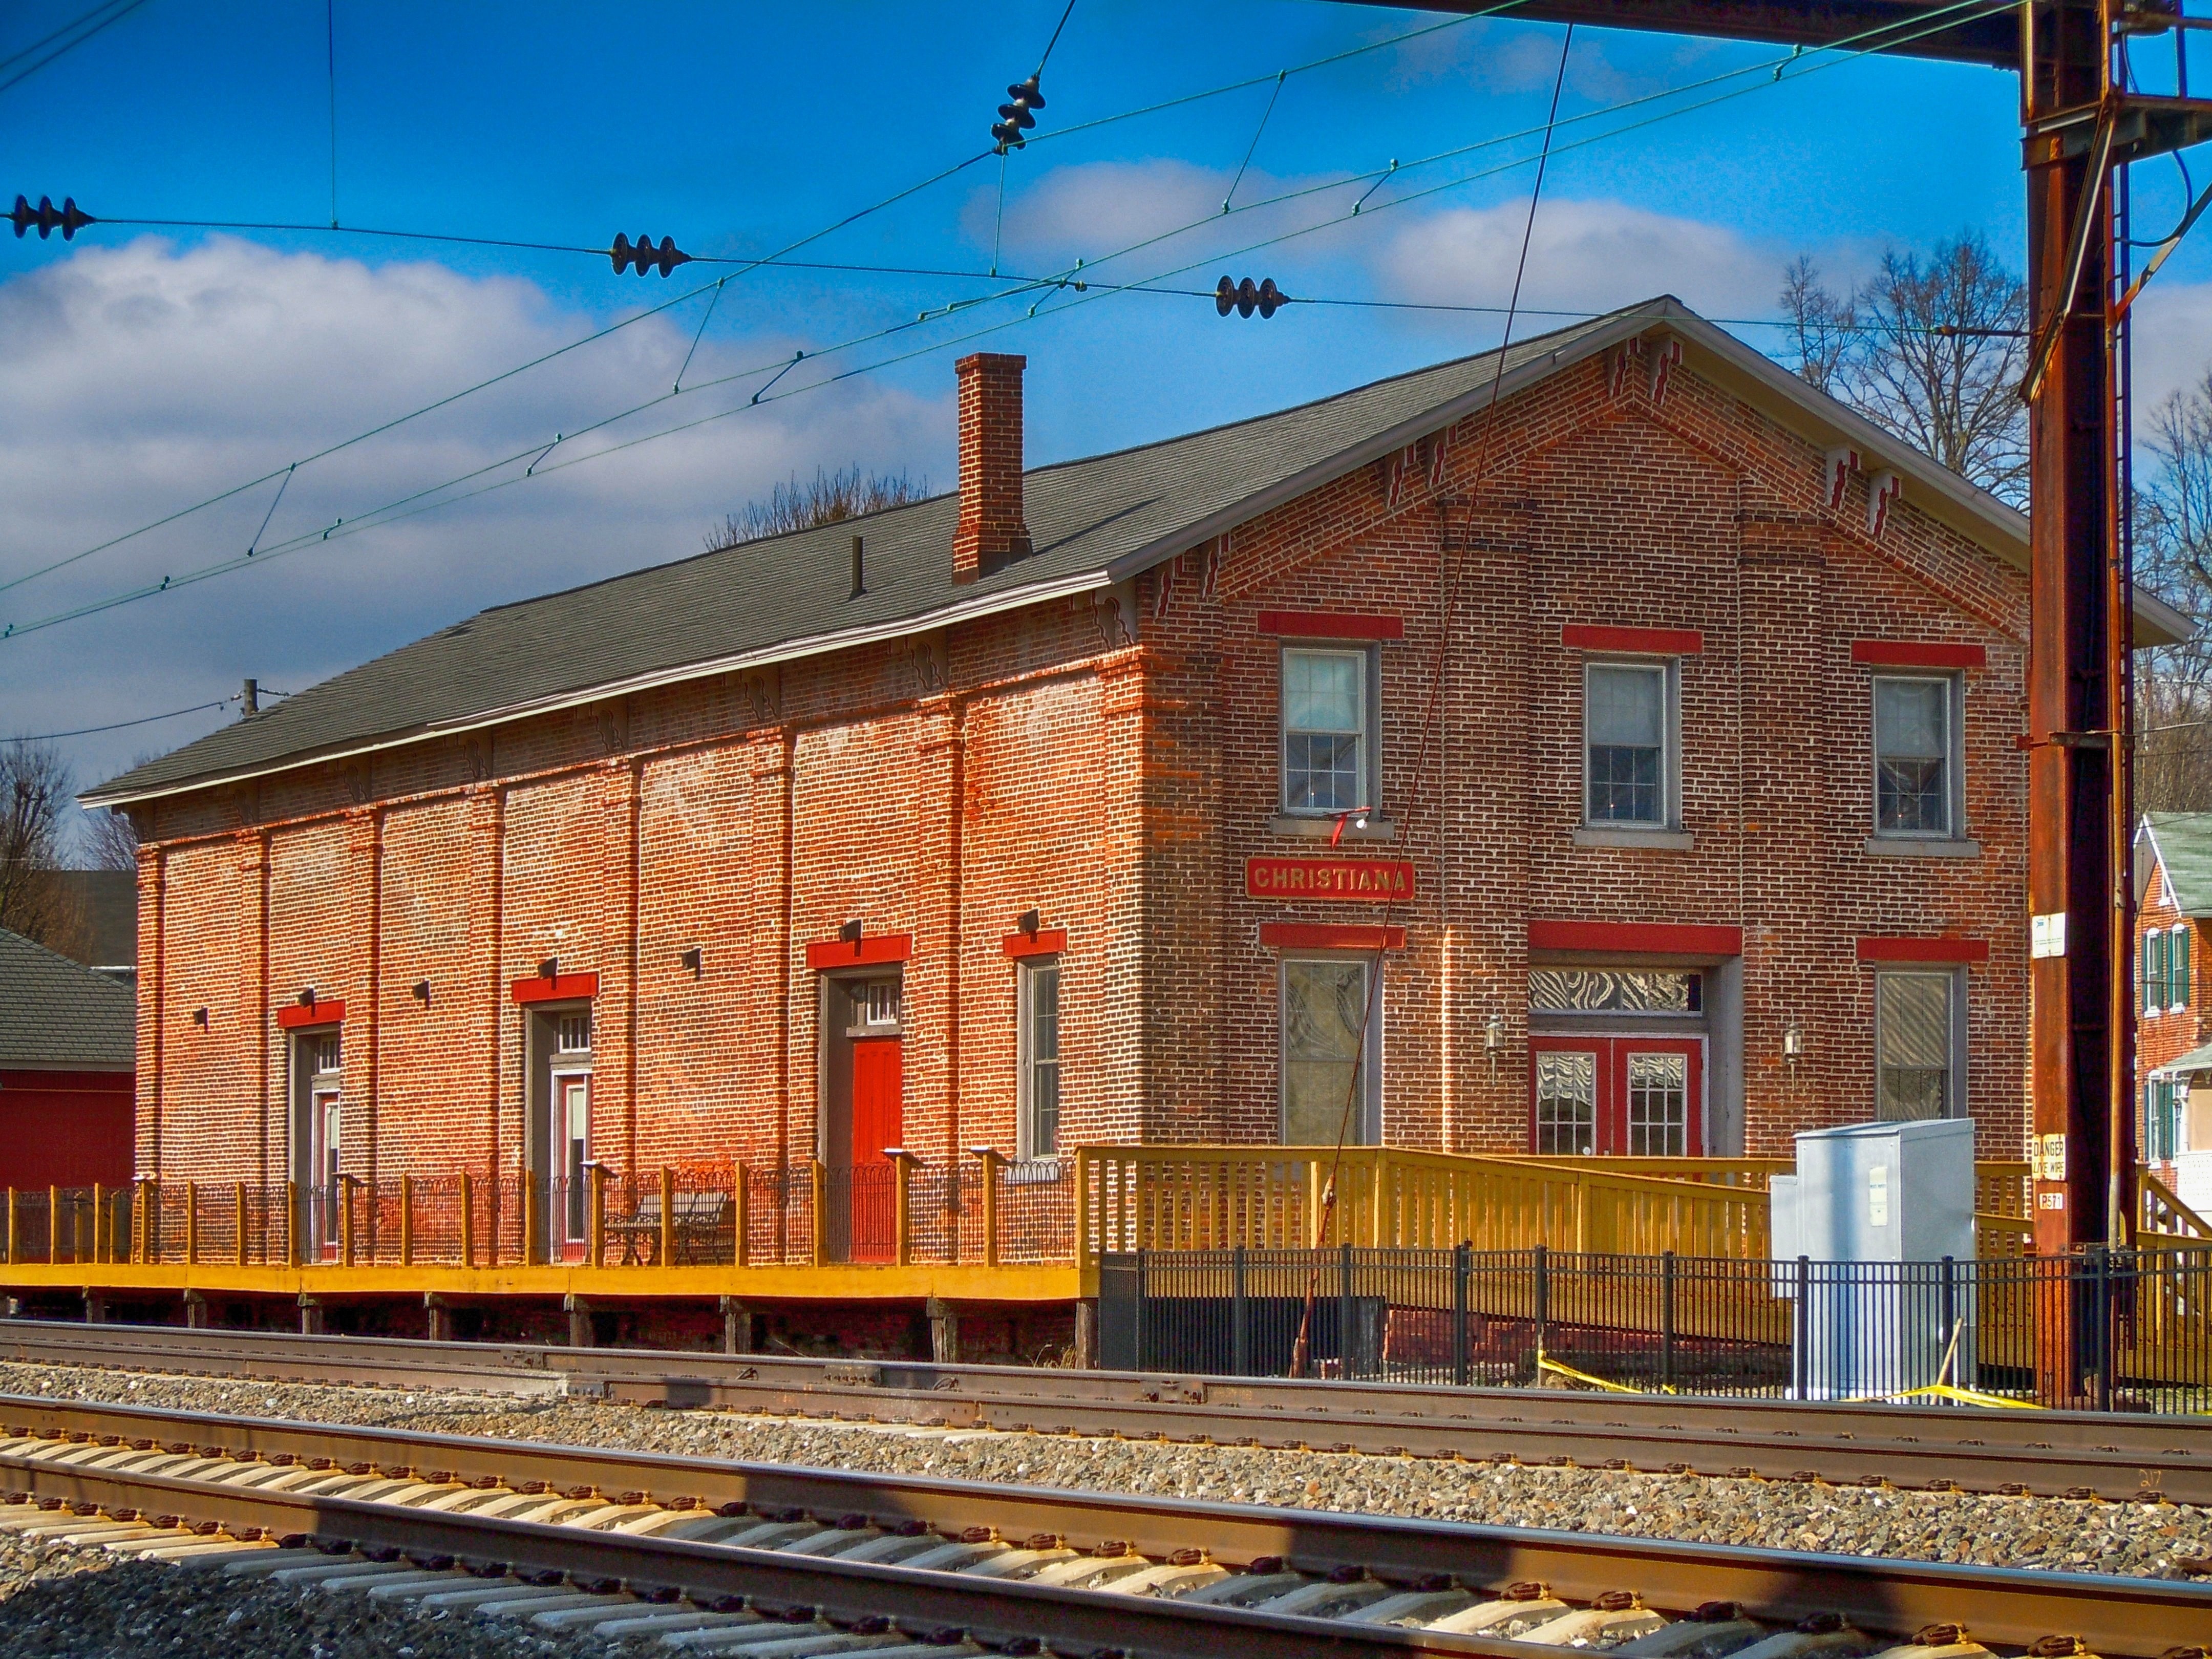 Christiana, Pennsylvania, railroad track, sky